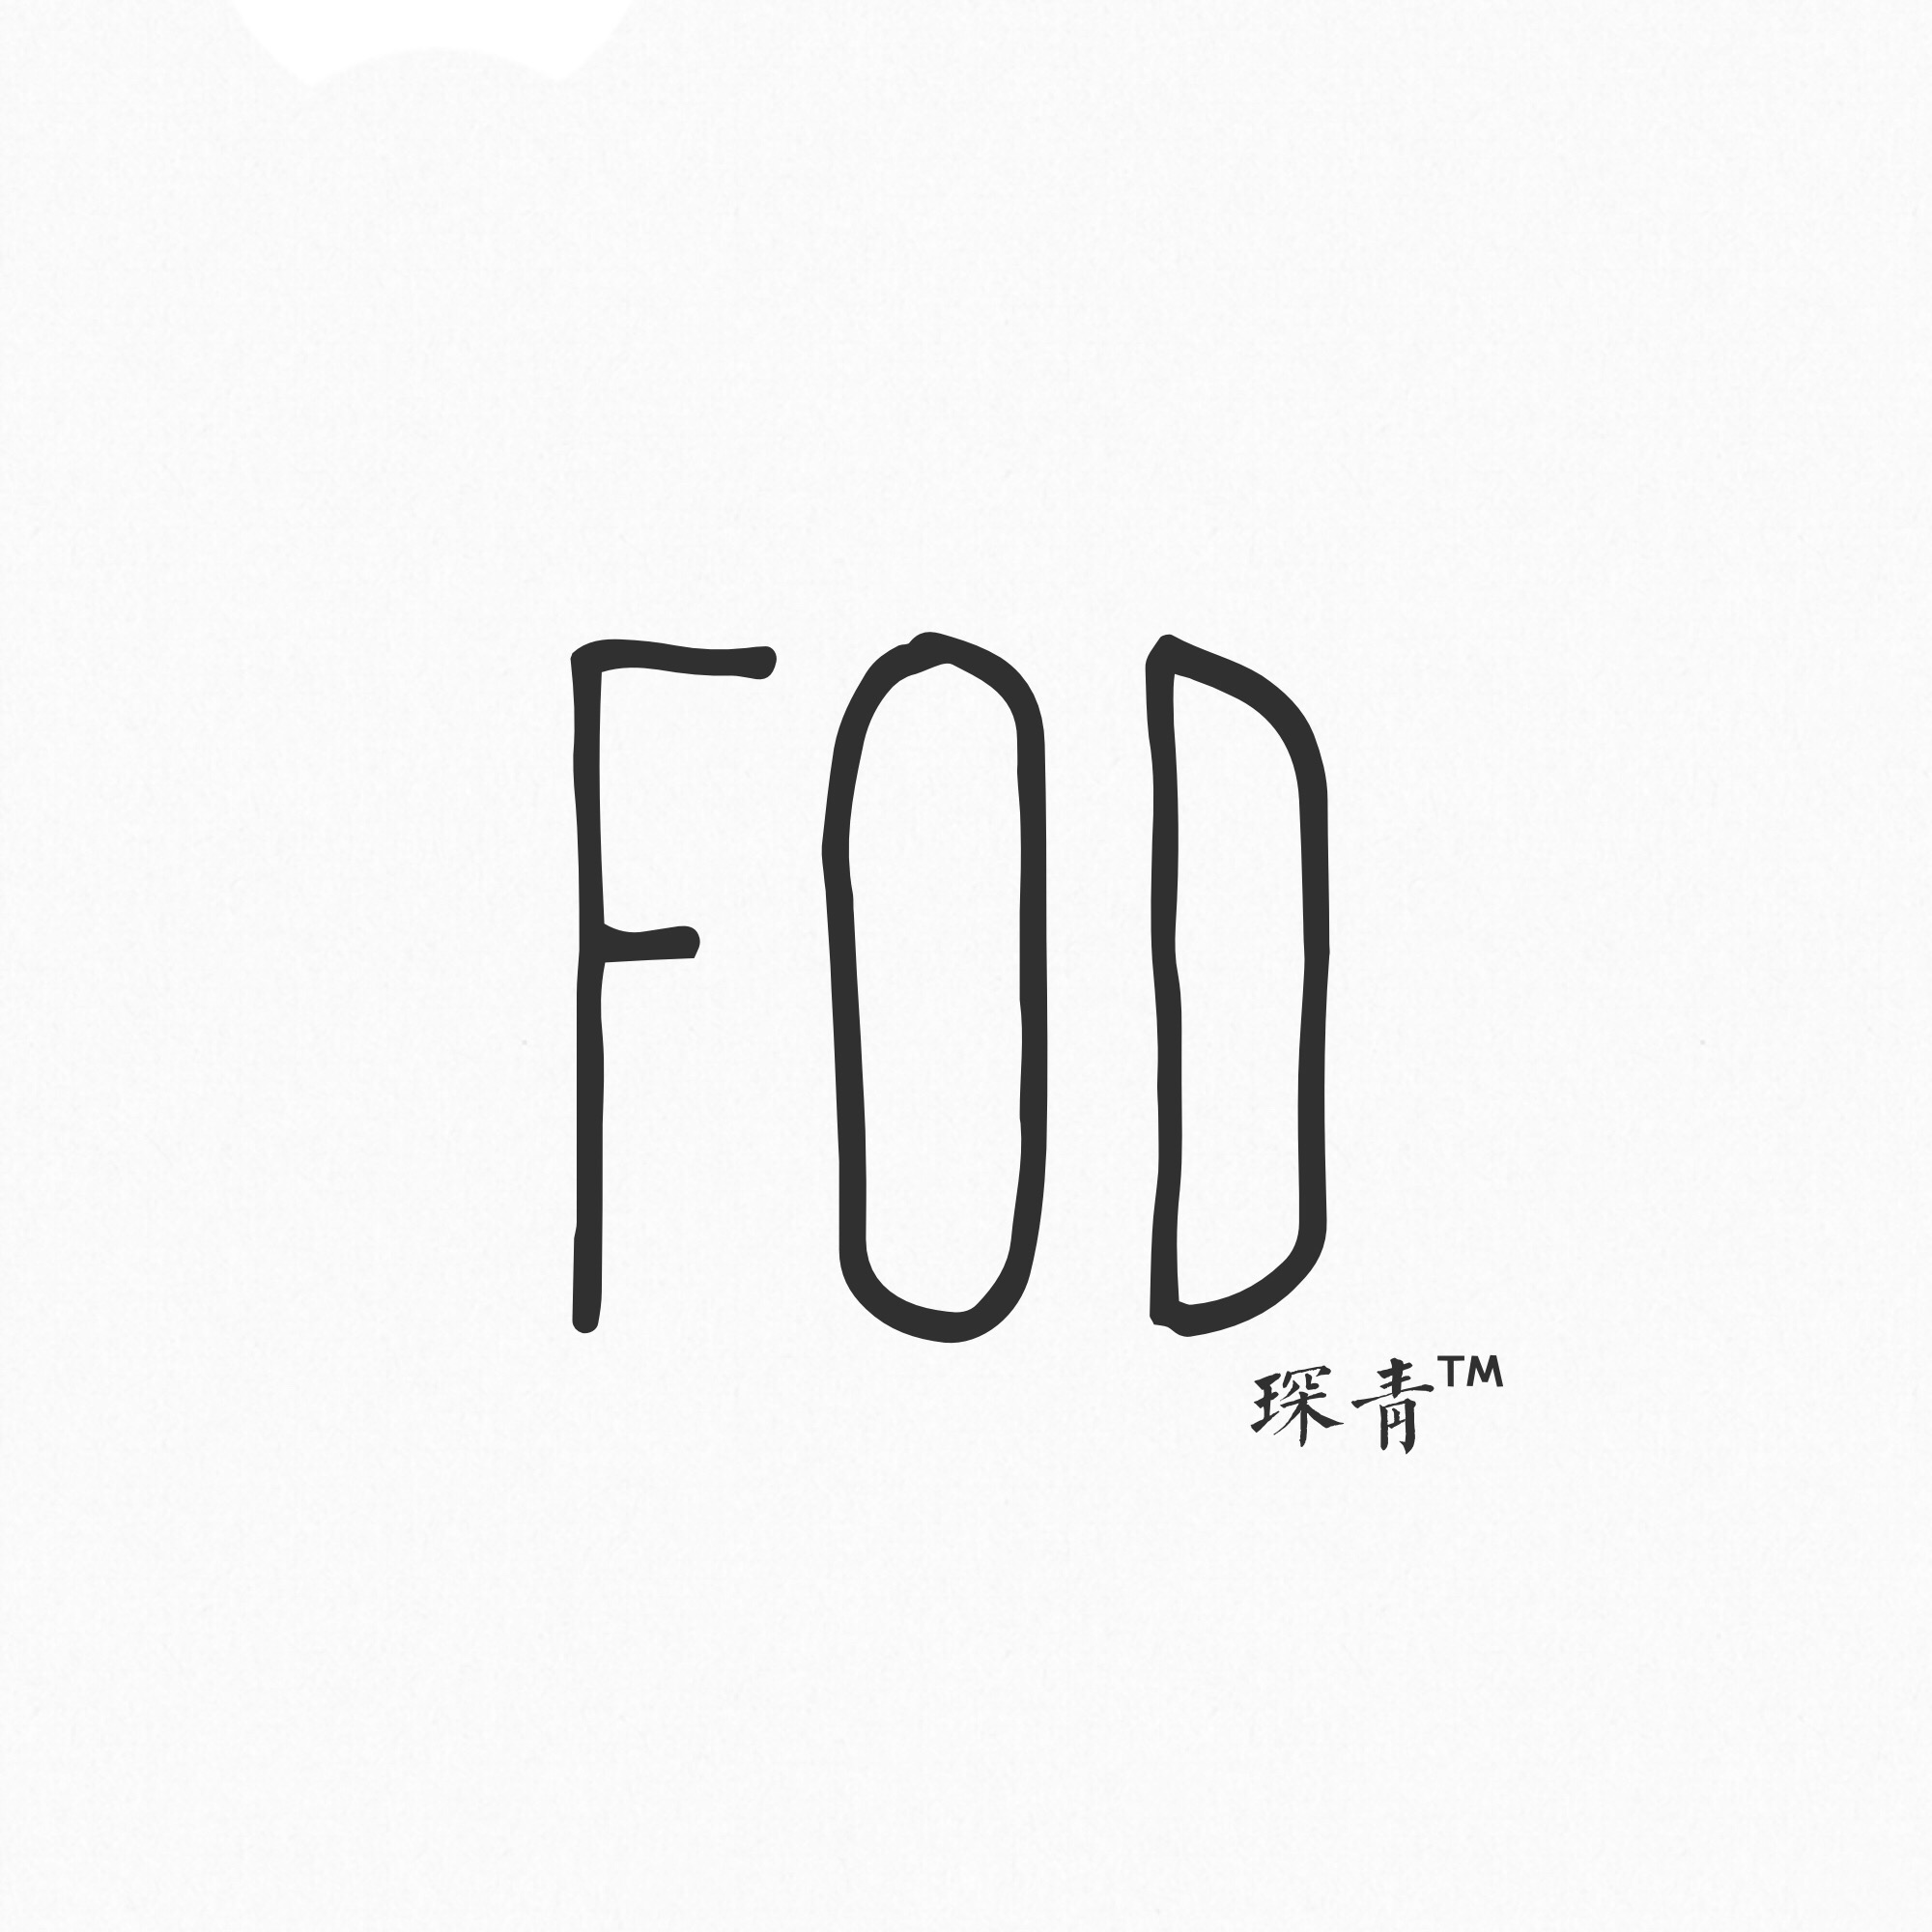 FOD(公益組織)